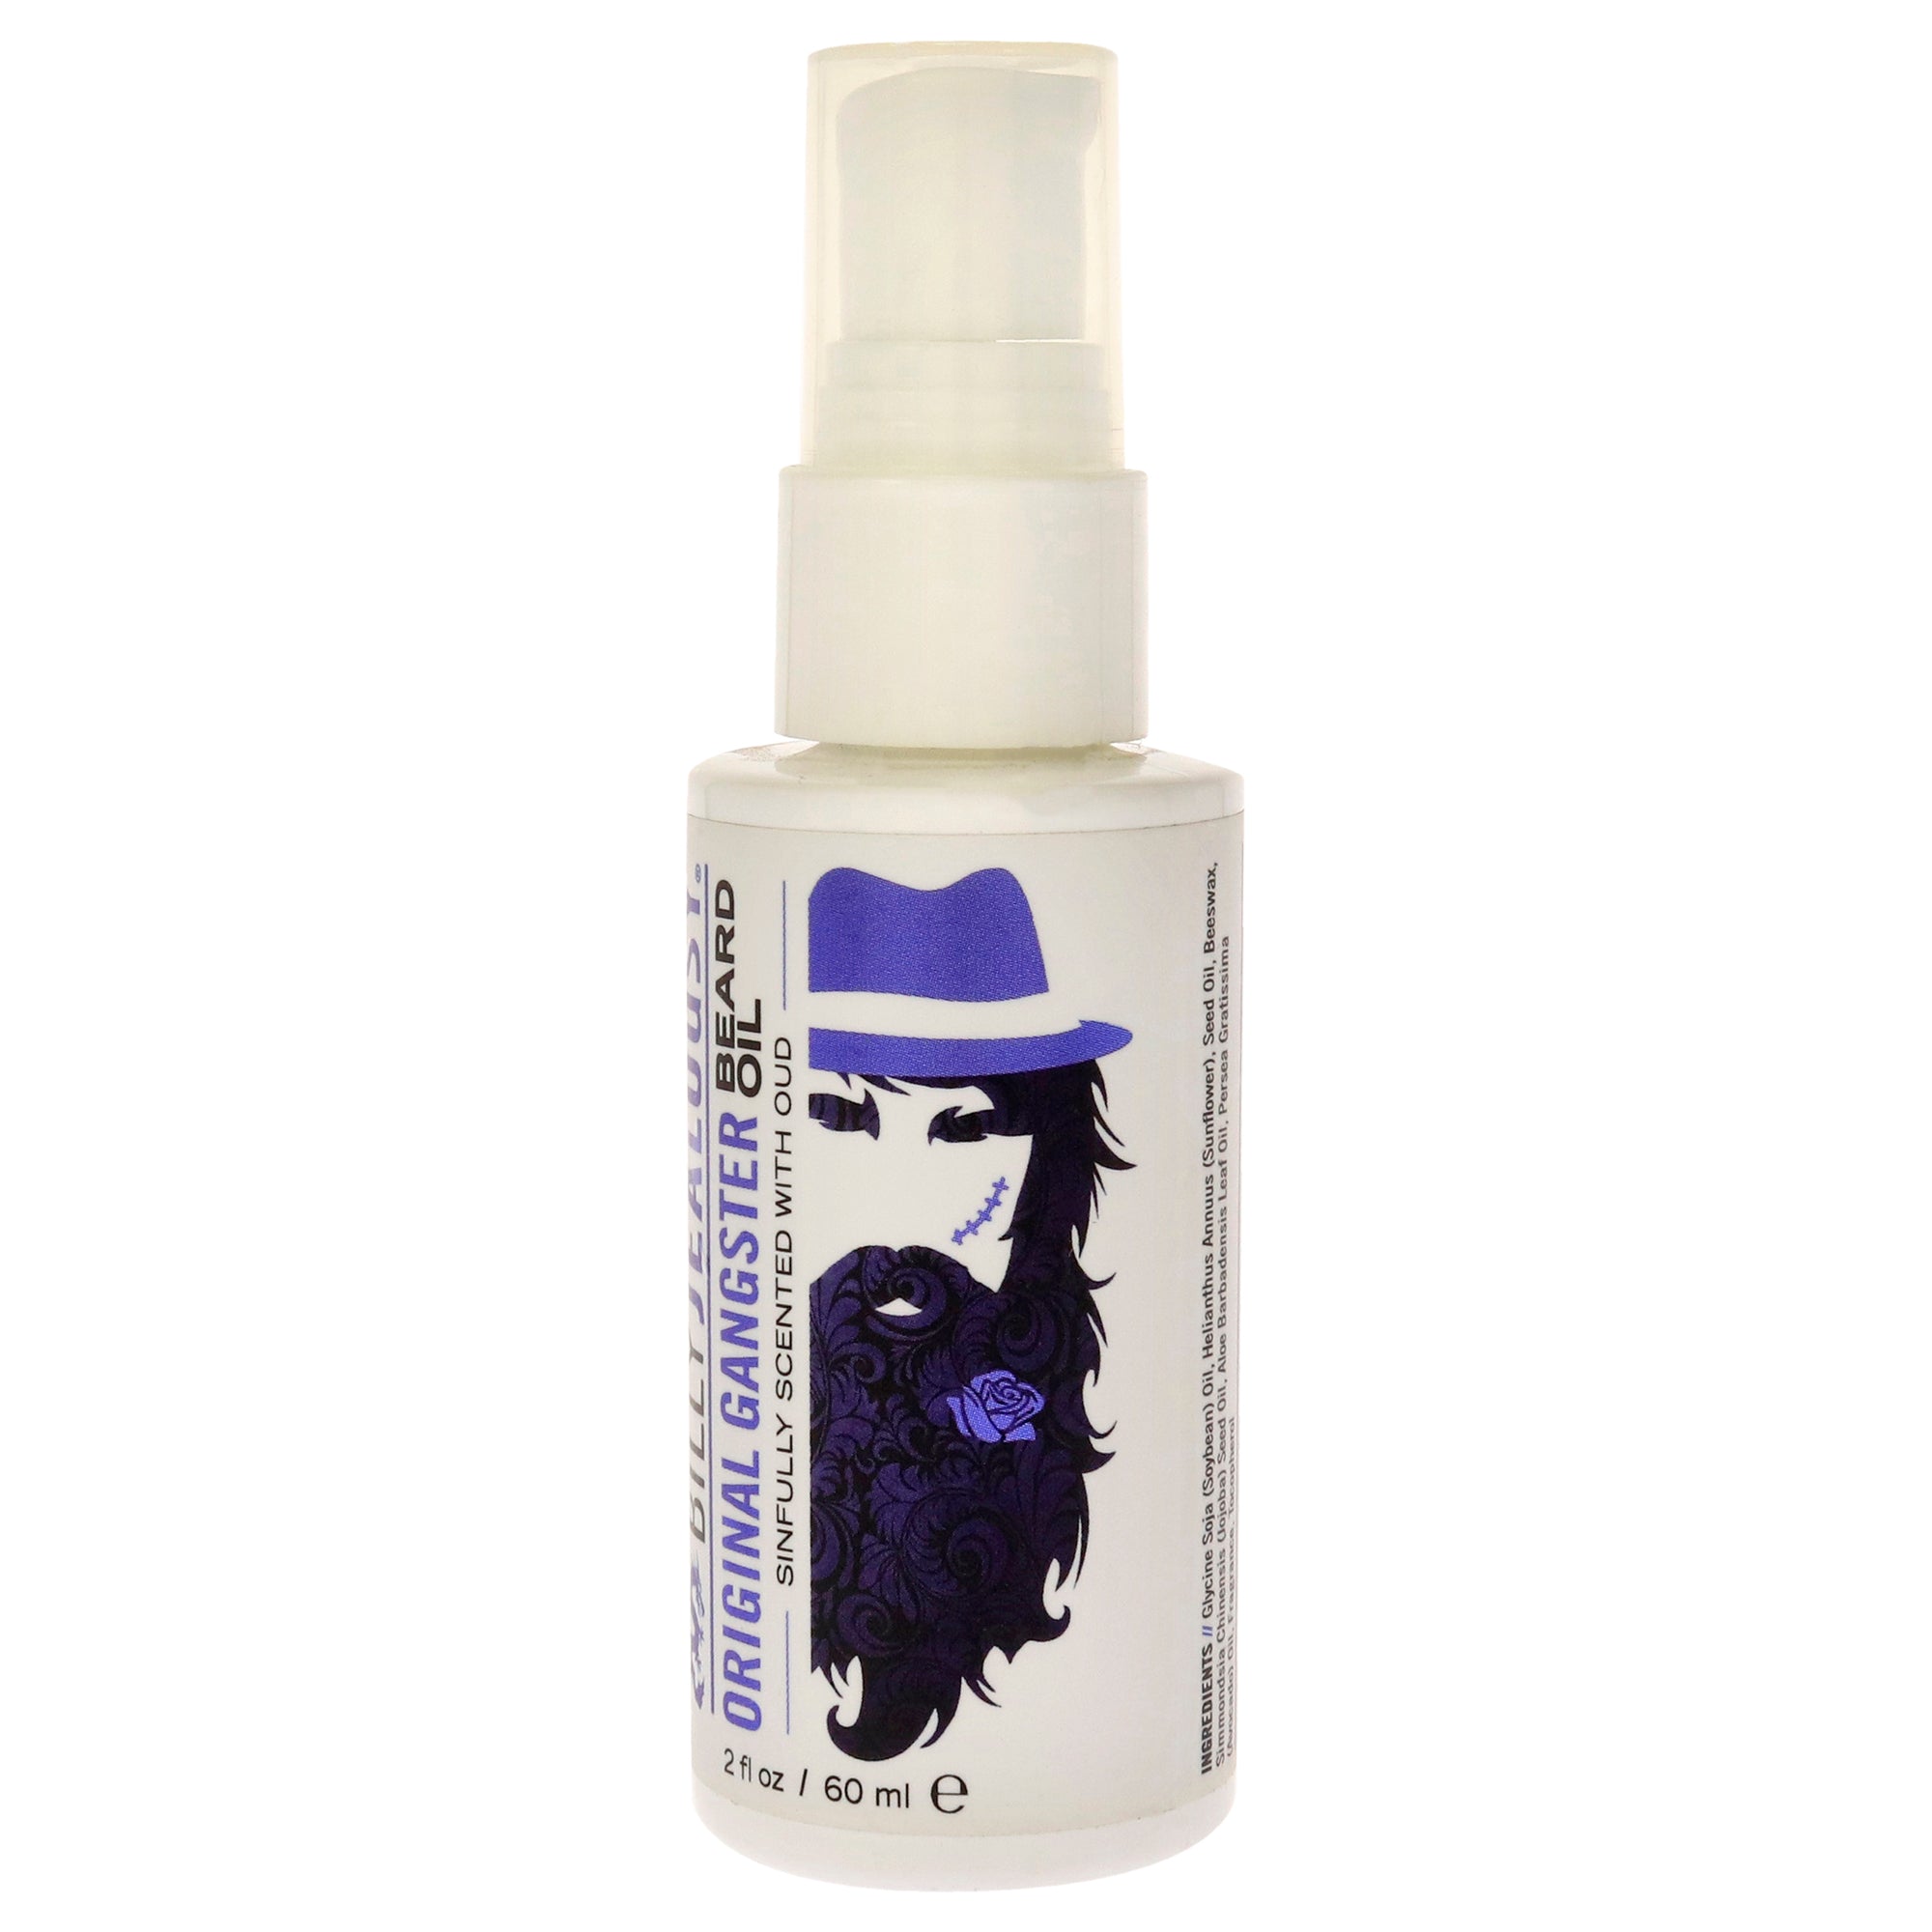 Original Gangster Beard Oil by Billy Jealousy for Men - 2 oz Oil